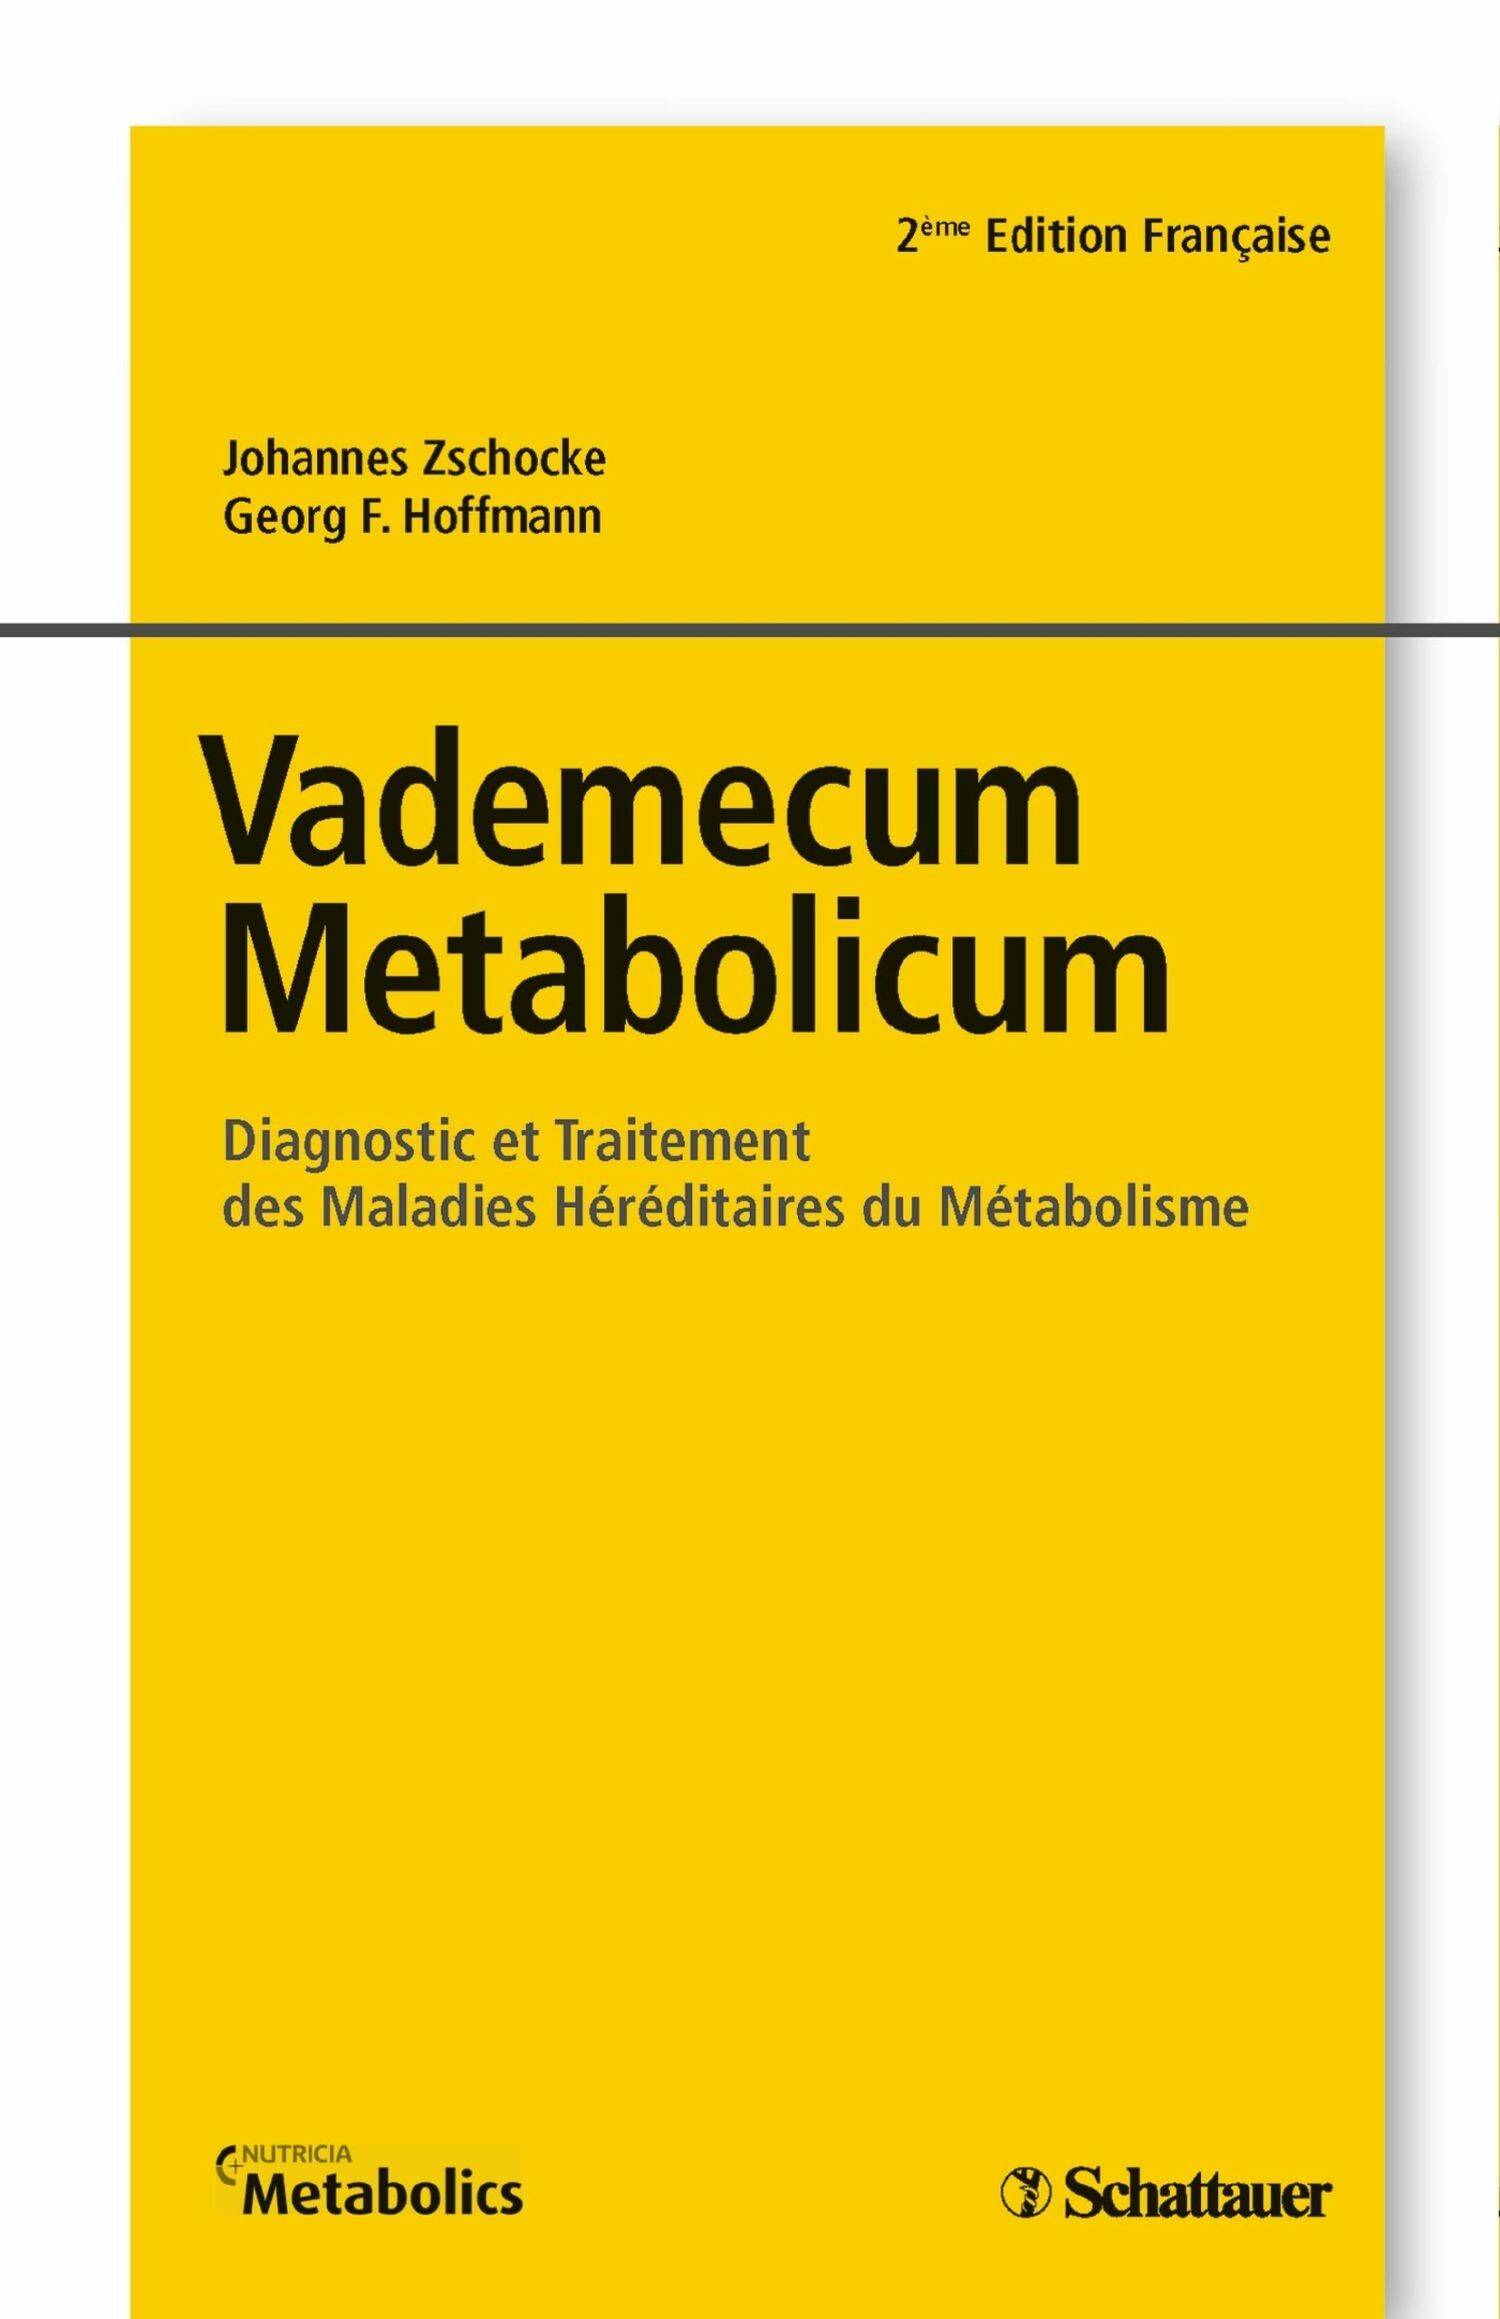 vademecum metabolicum pdf free download